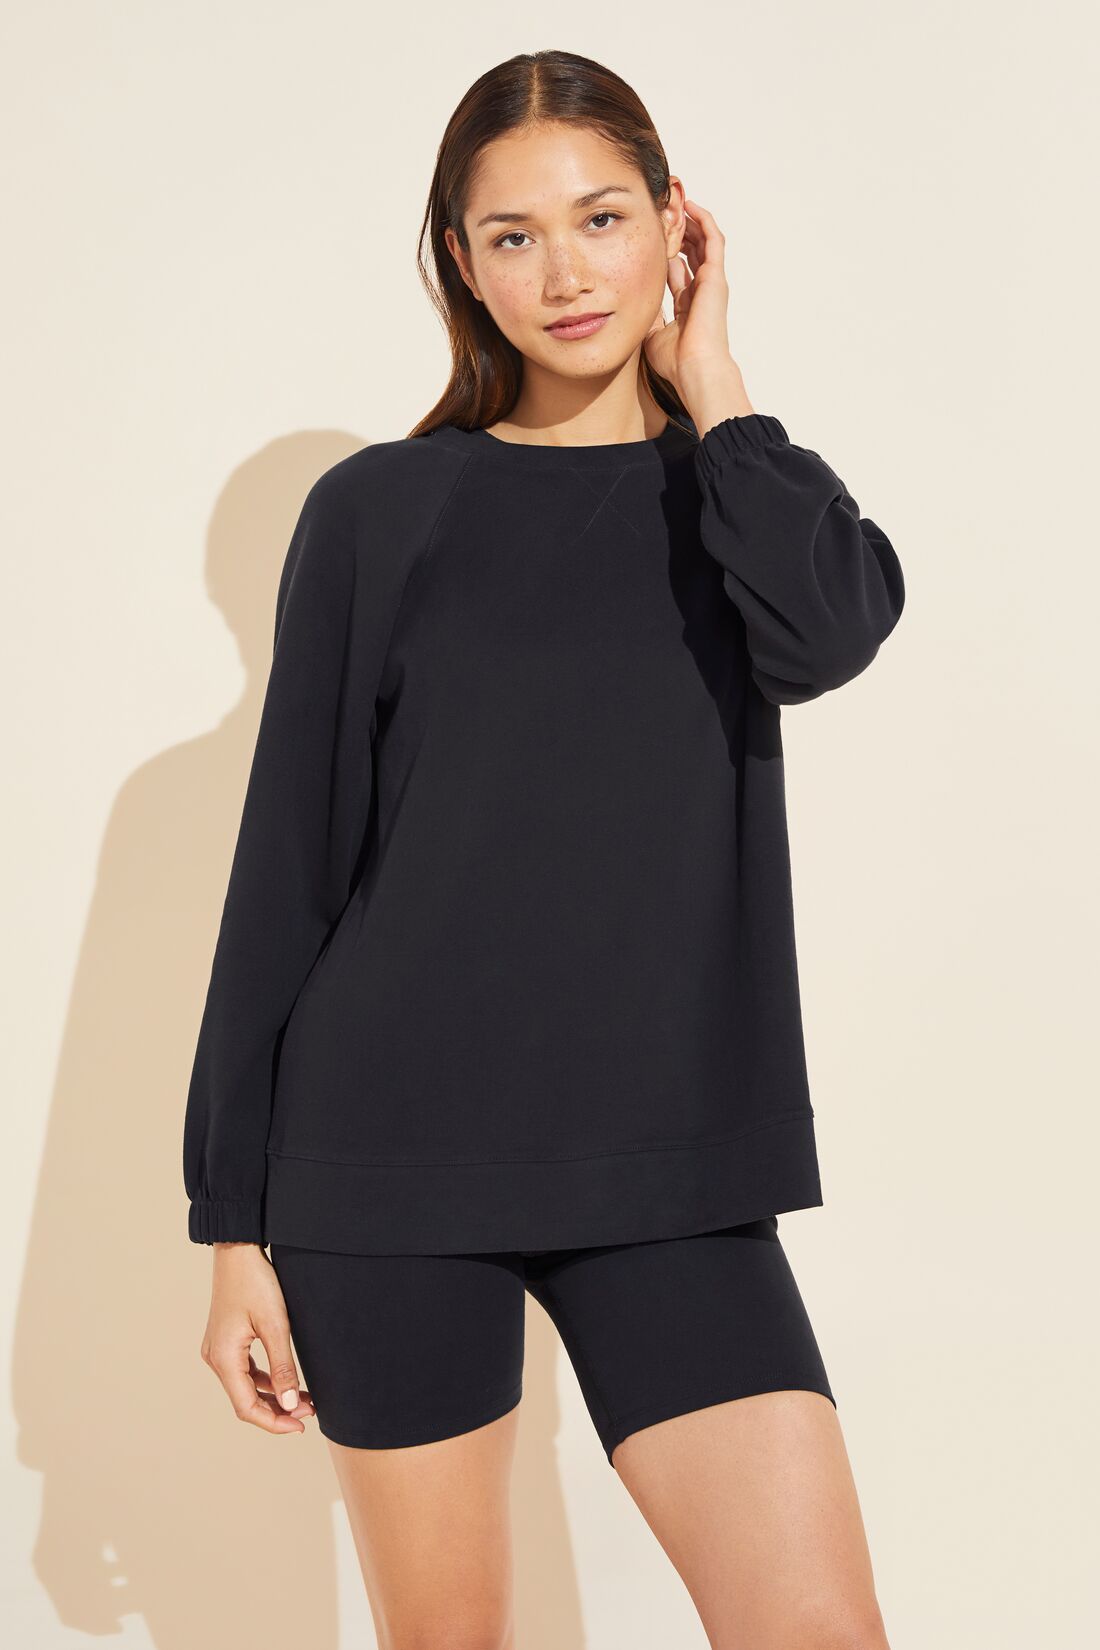 Luxe Sweats Sweatshirt - Black